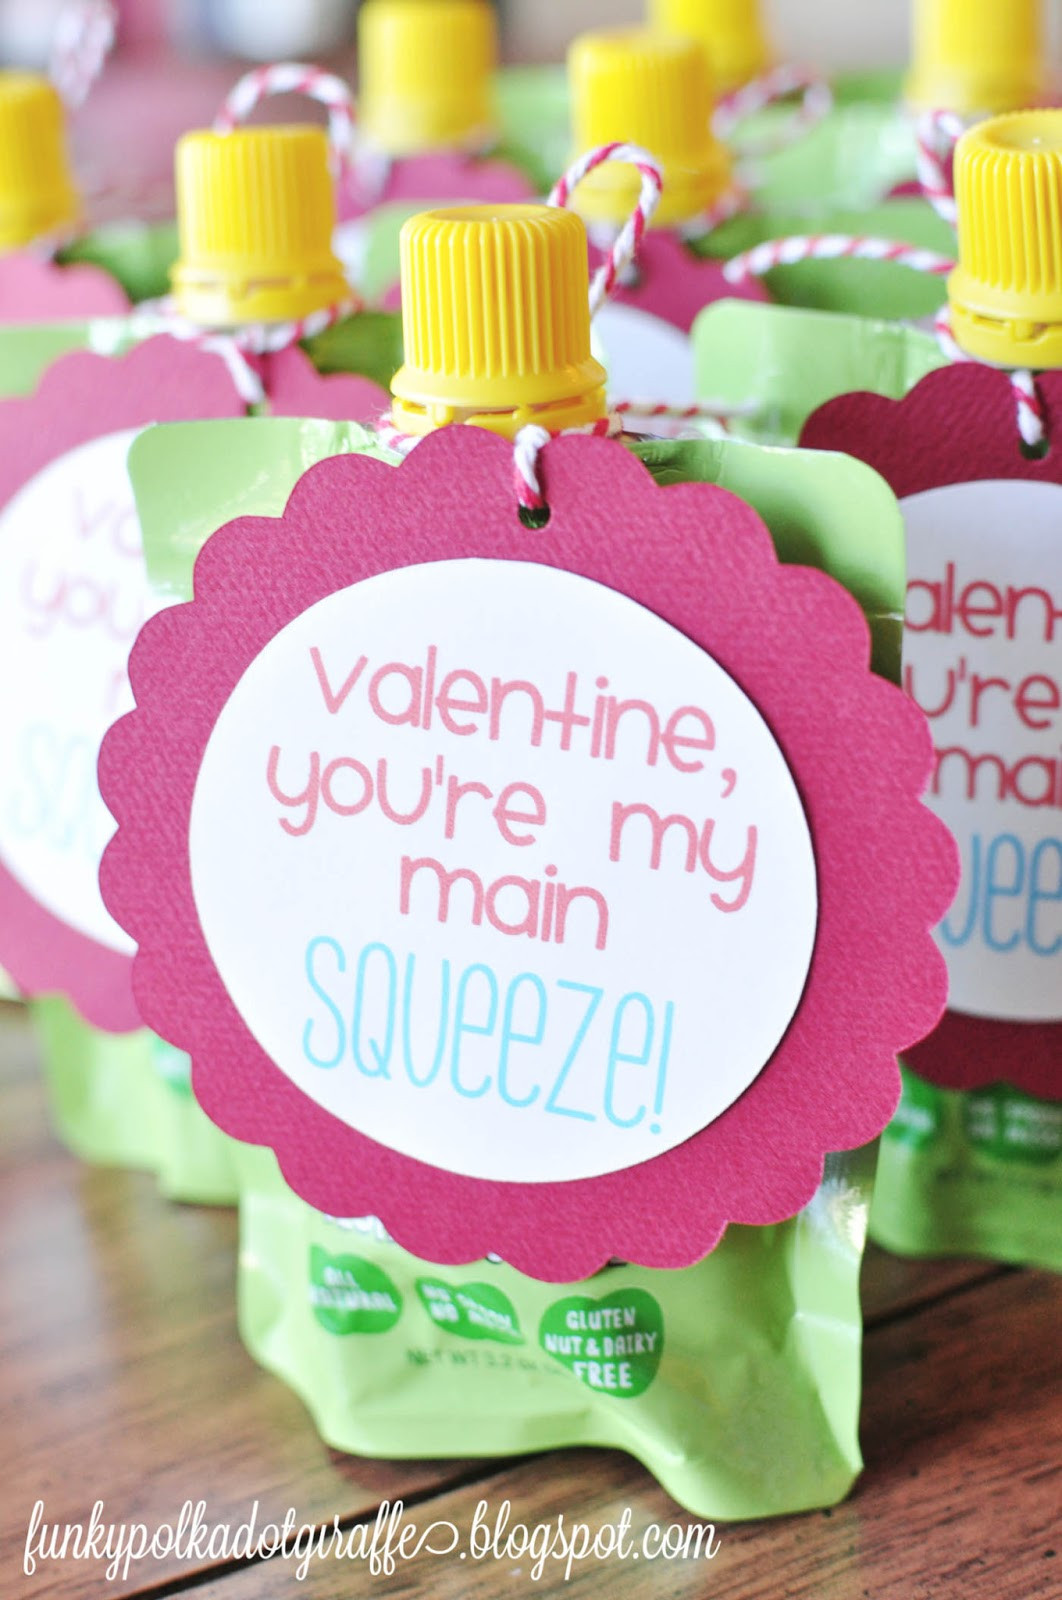 Child Valentine Gift Ideas
 Funky Polkadot Giraffe Preschool Valentines You re My